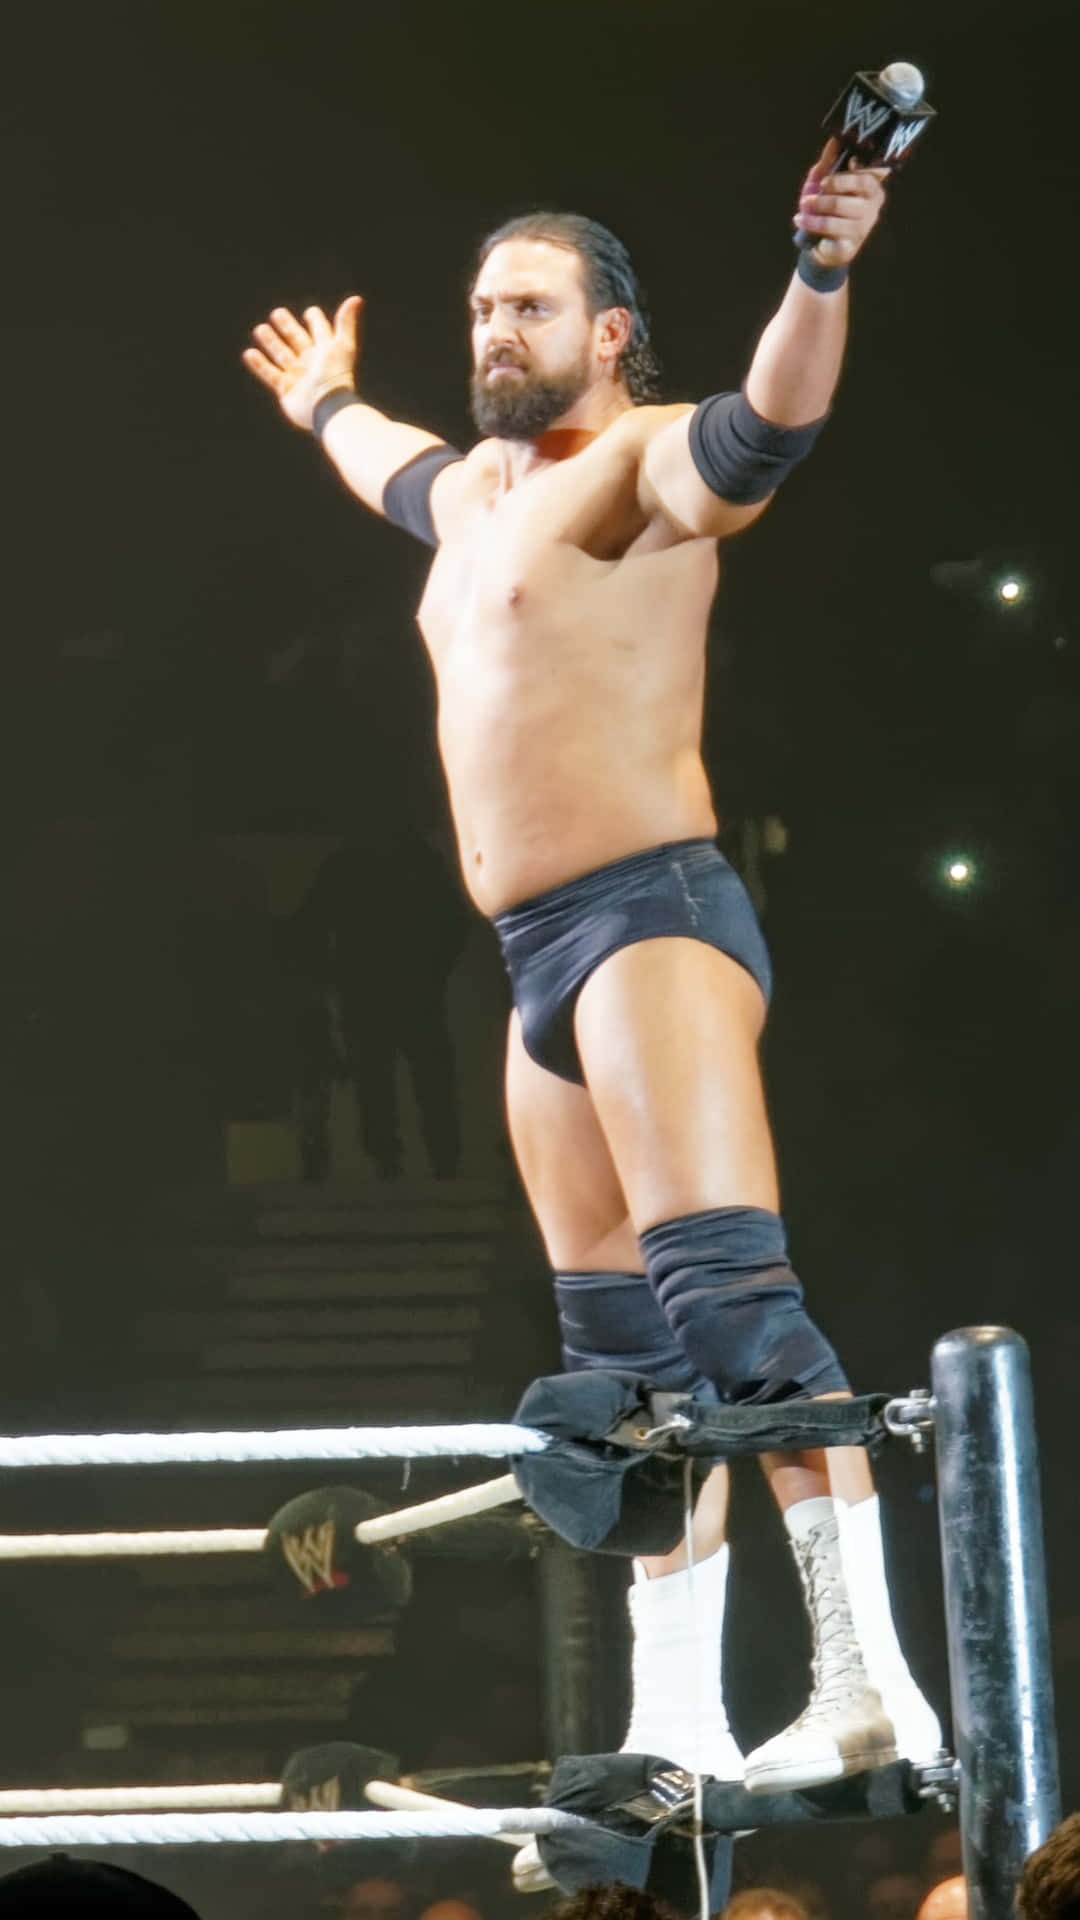 American Professional Wrestler Damien Sandow In Action 2013 Wallpaper